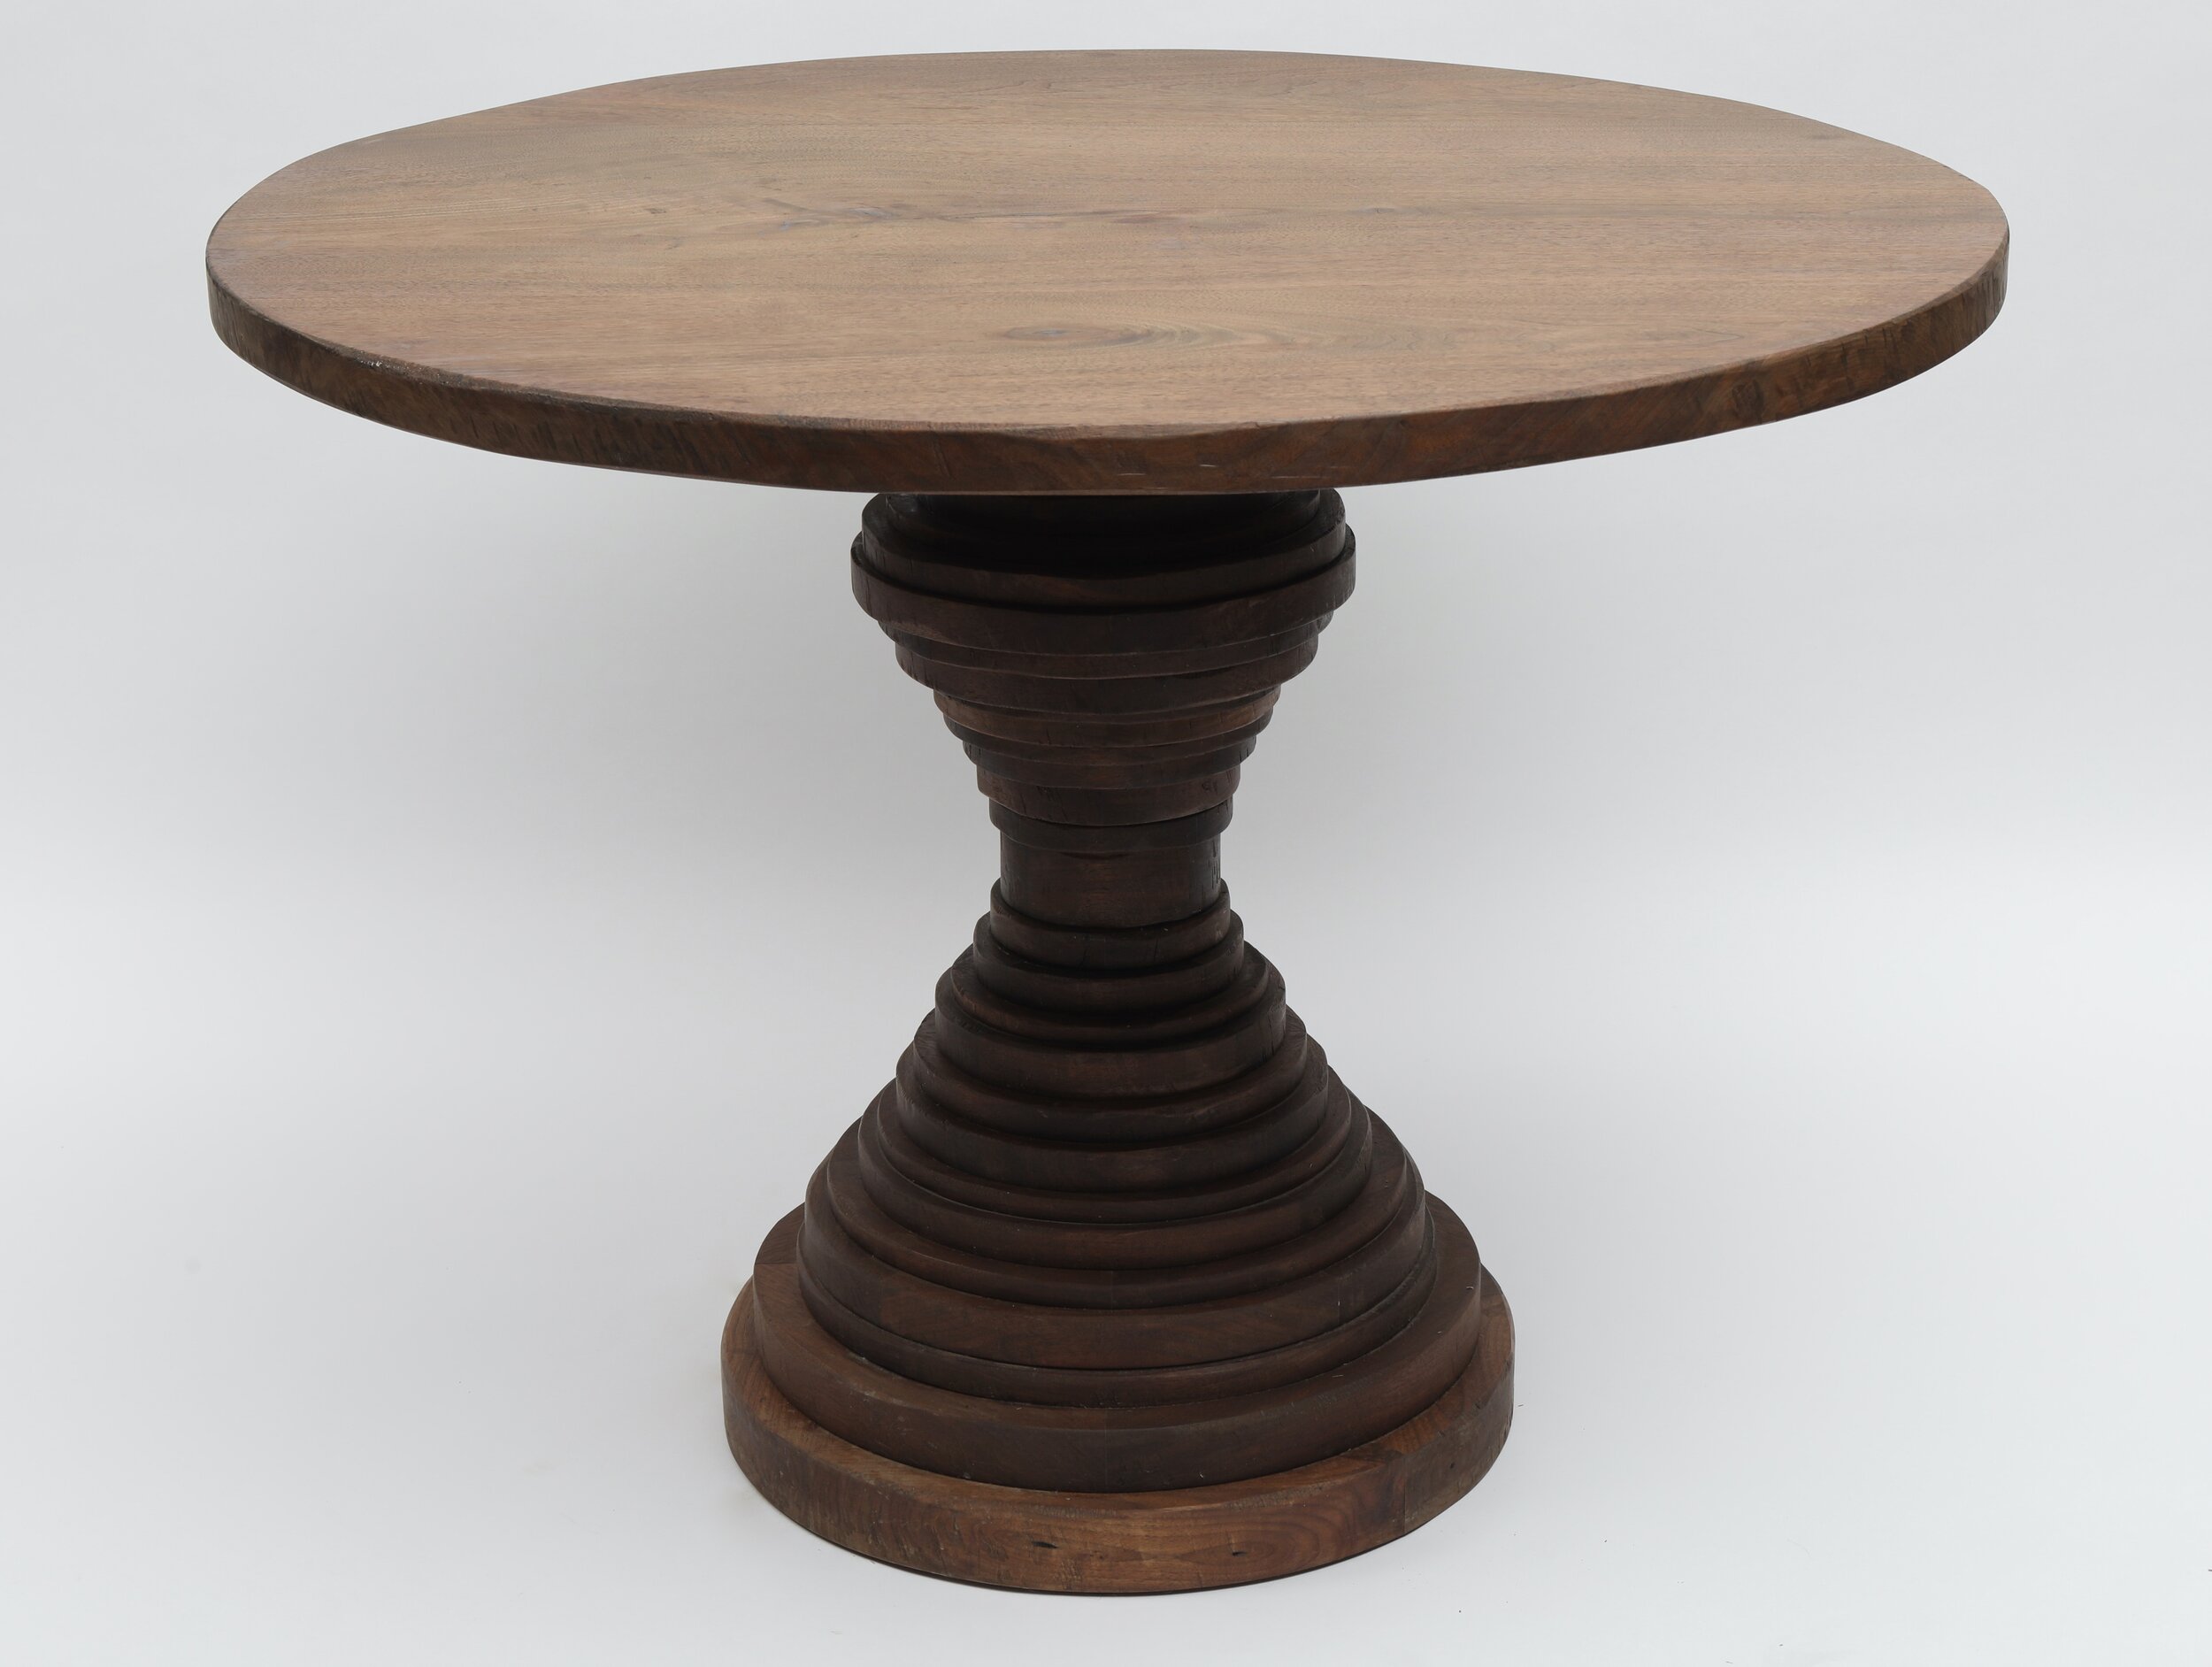   Solid Black Walnut Graduated Circle Pedestal Dining Table 29.5"h x 41"d  